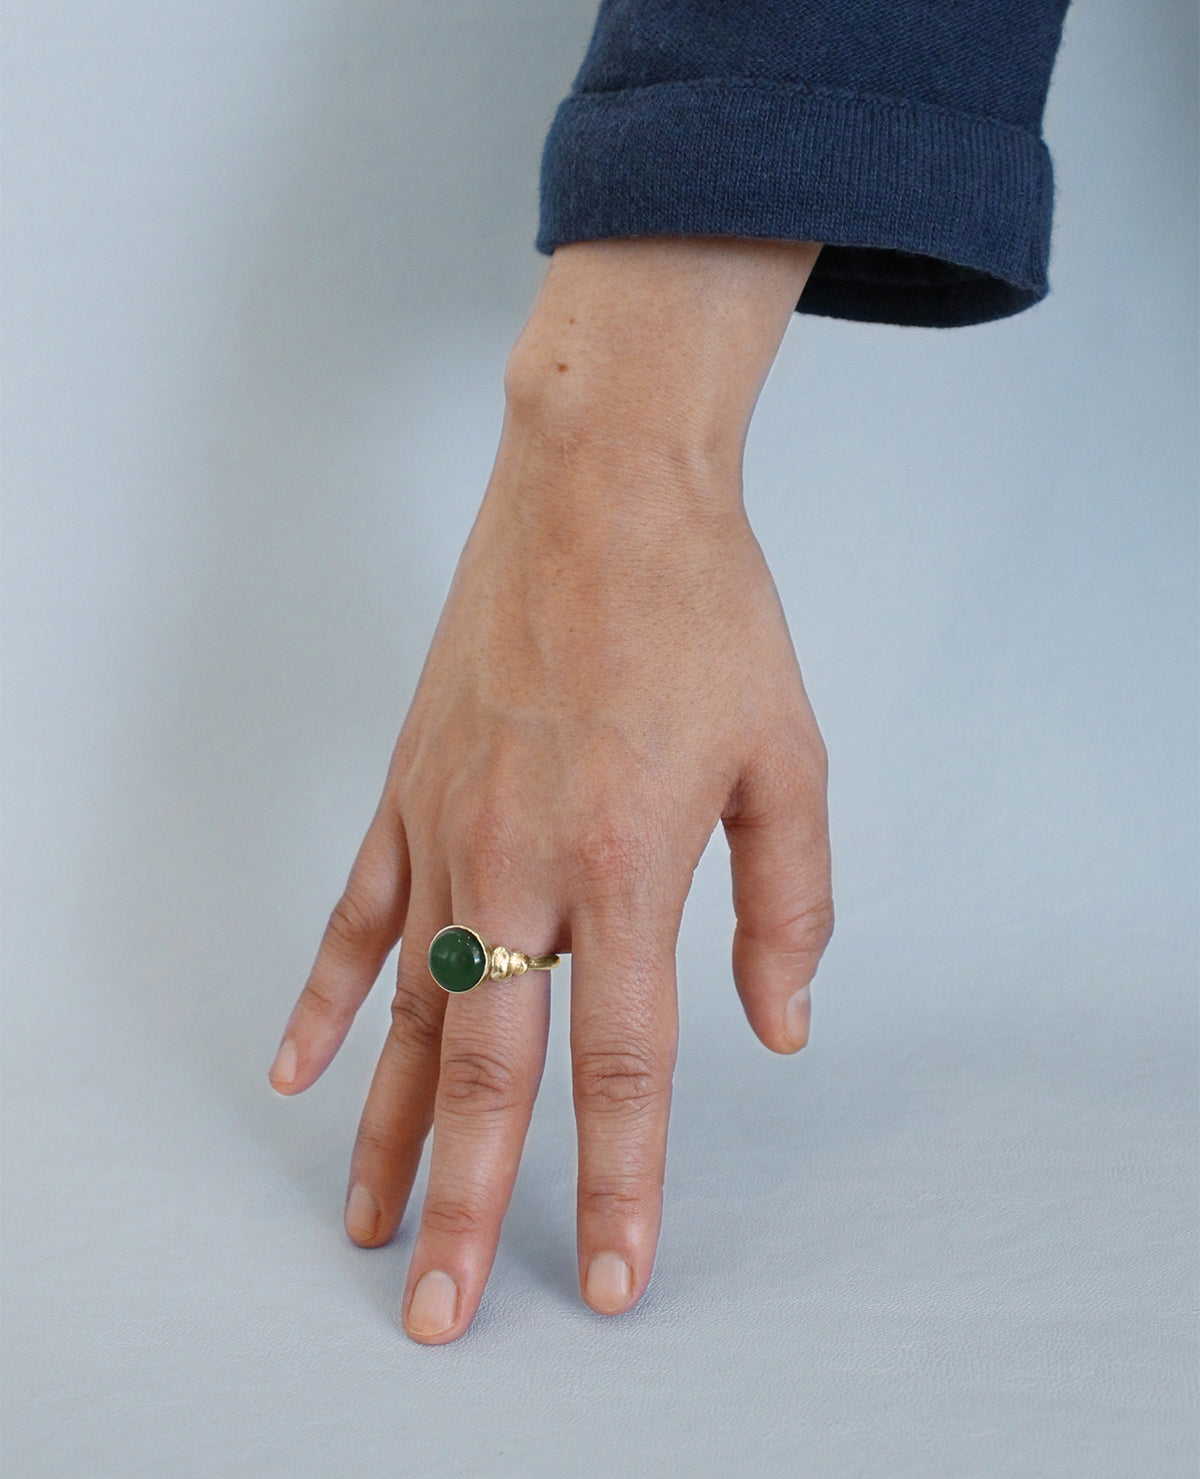 SOLARI // golden ring - ORA-C jewelry - handmade jewelry by Montreal based independent designer Caroline Pham